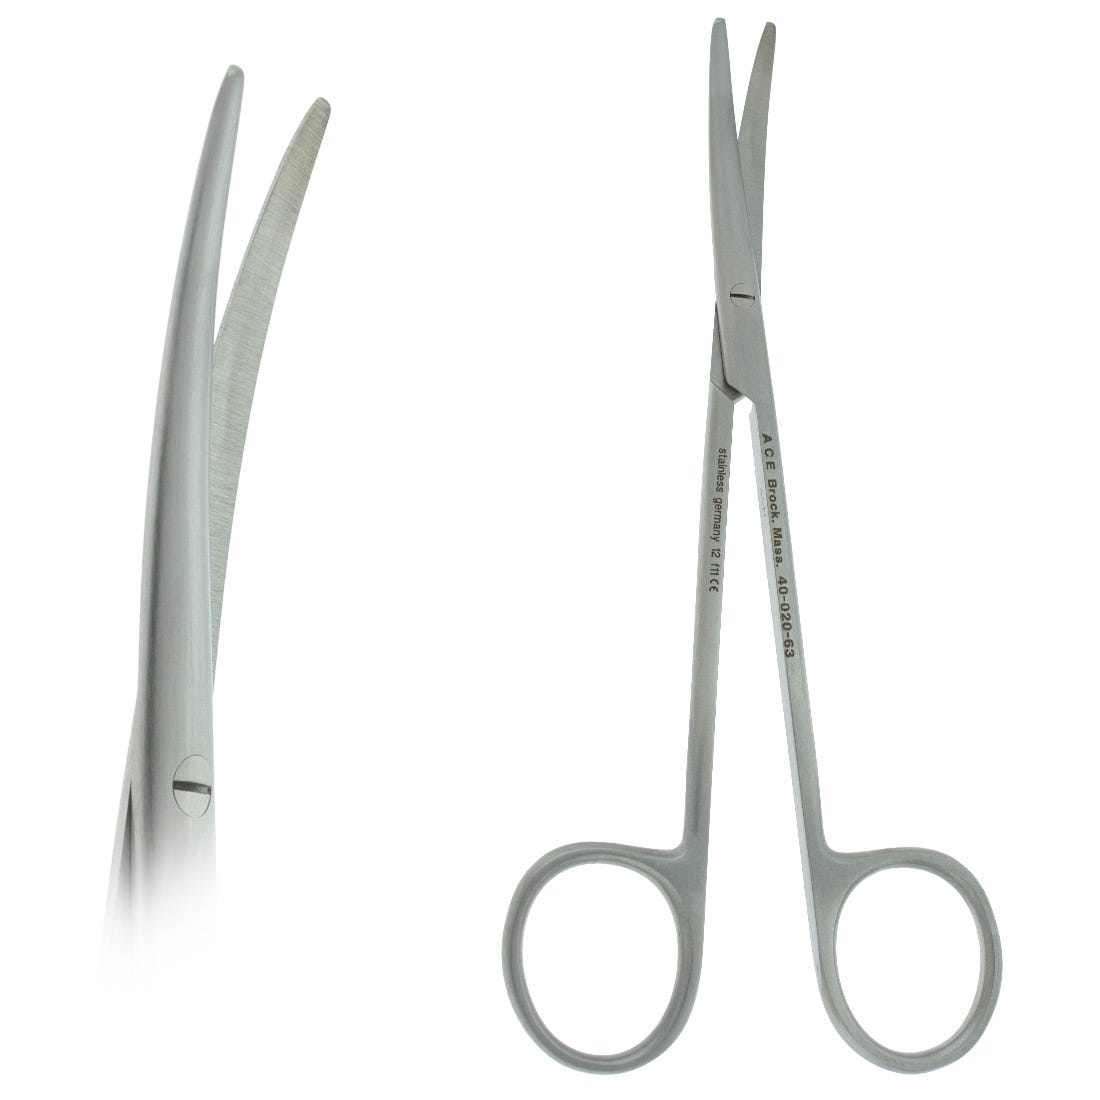 ACE Lahey Metzenbaum Dissecting Scissors, curved